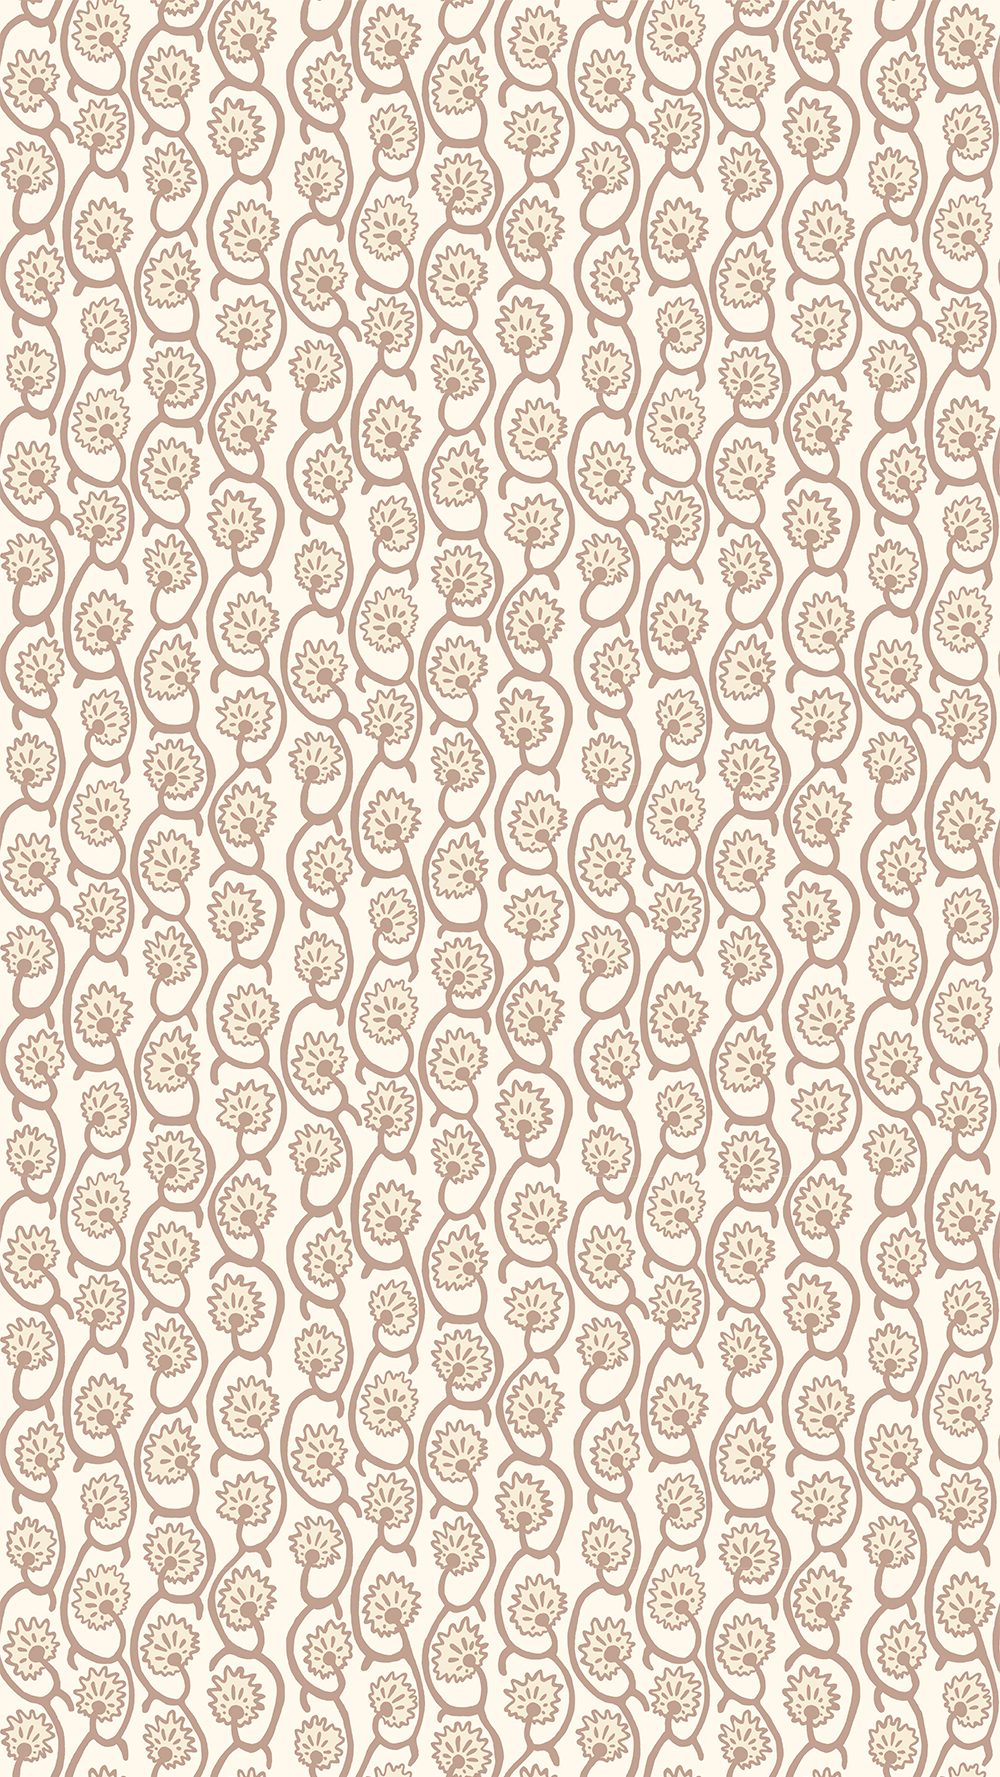 GER-012-035-048-josephine-munsey-wallpaper-geranium-stripe-ham-pink-salt-ridge-cotswold-white-organic-trailing-floral-pattern-wallpaper-print-traditional-cottage-style